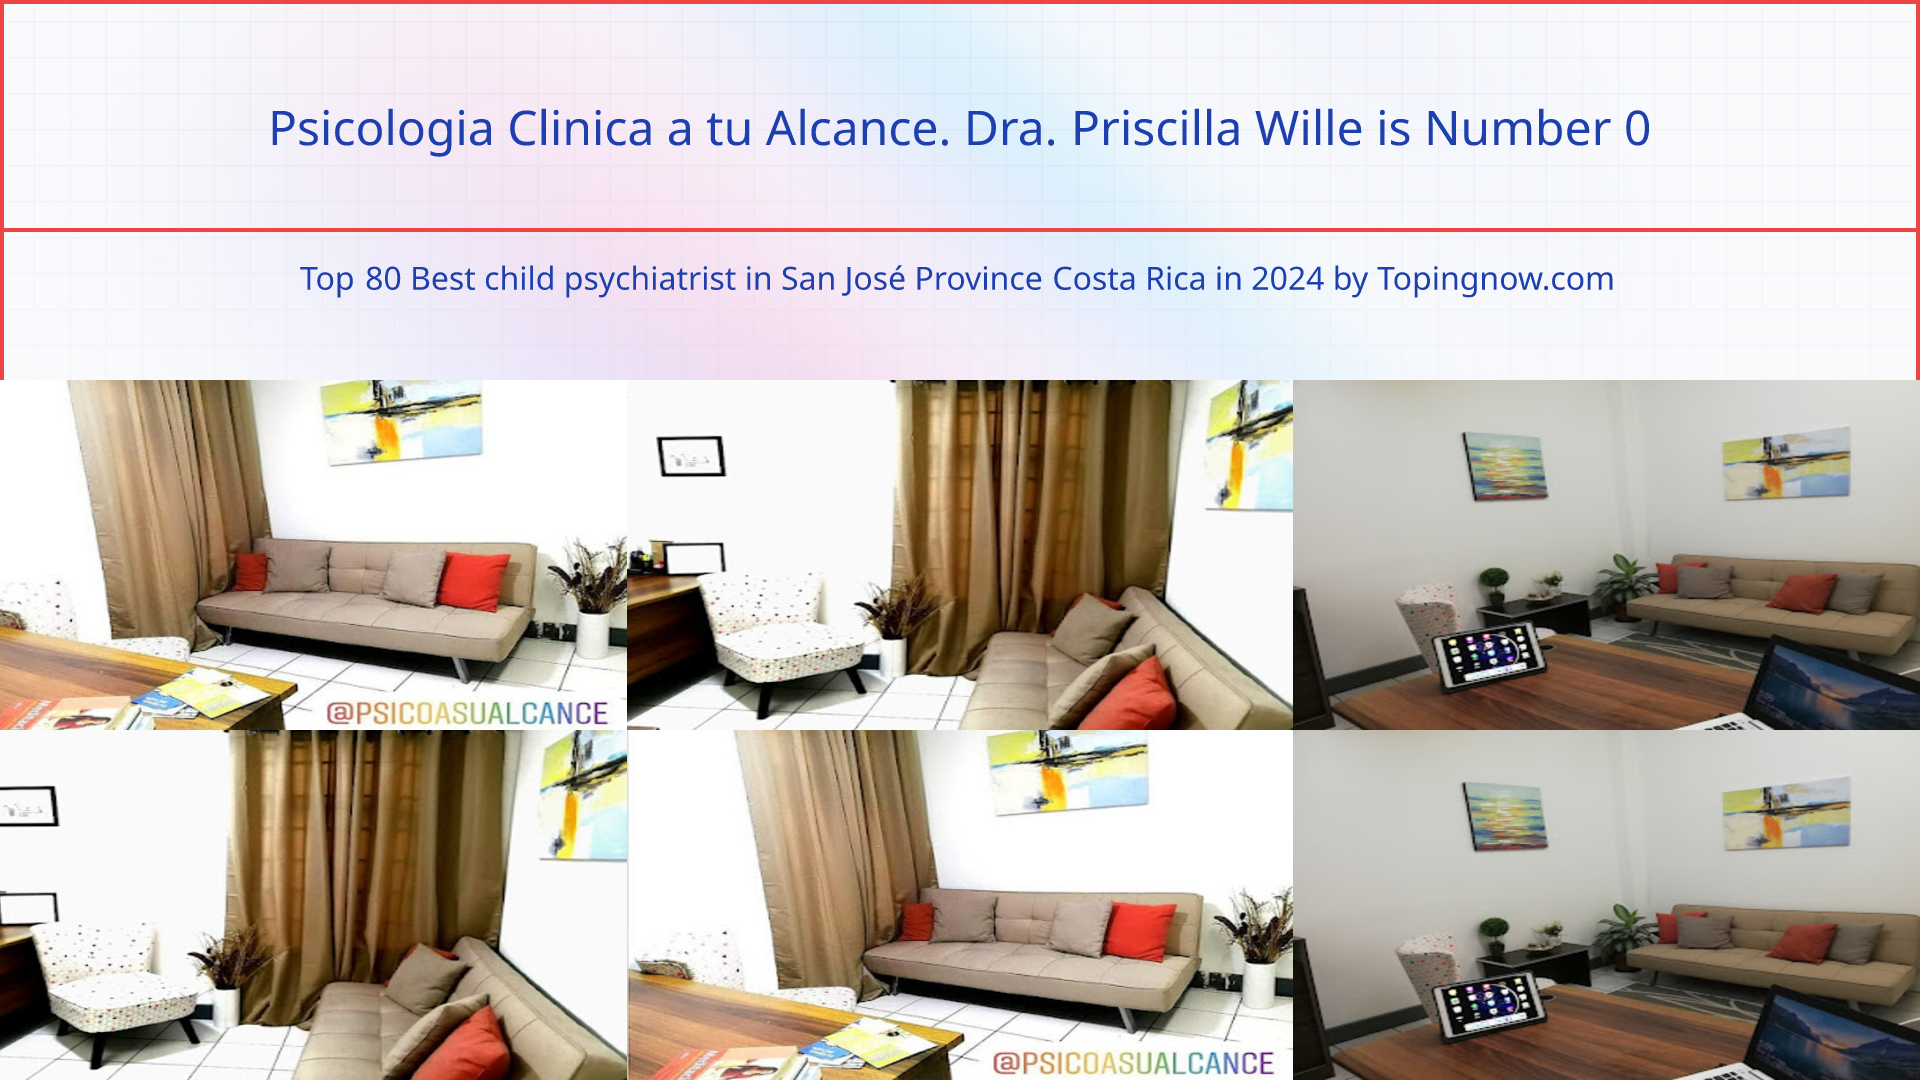 Psicologia Clinica a tu Alcance. Dra. Priscilla Wille: Top 80 Best child psychiatrist in San José Province Costa Rica in 2024